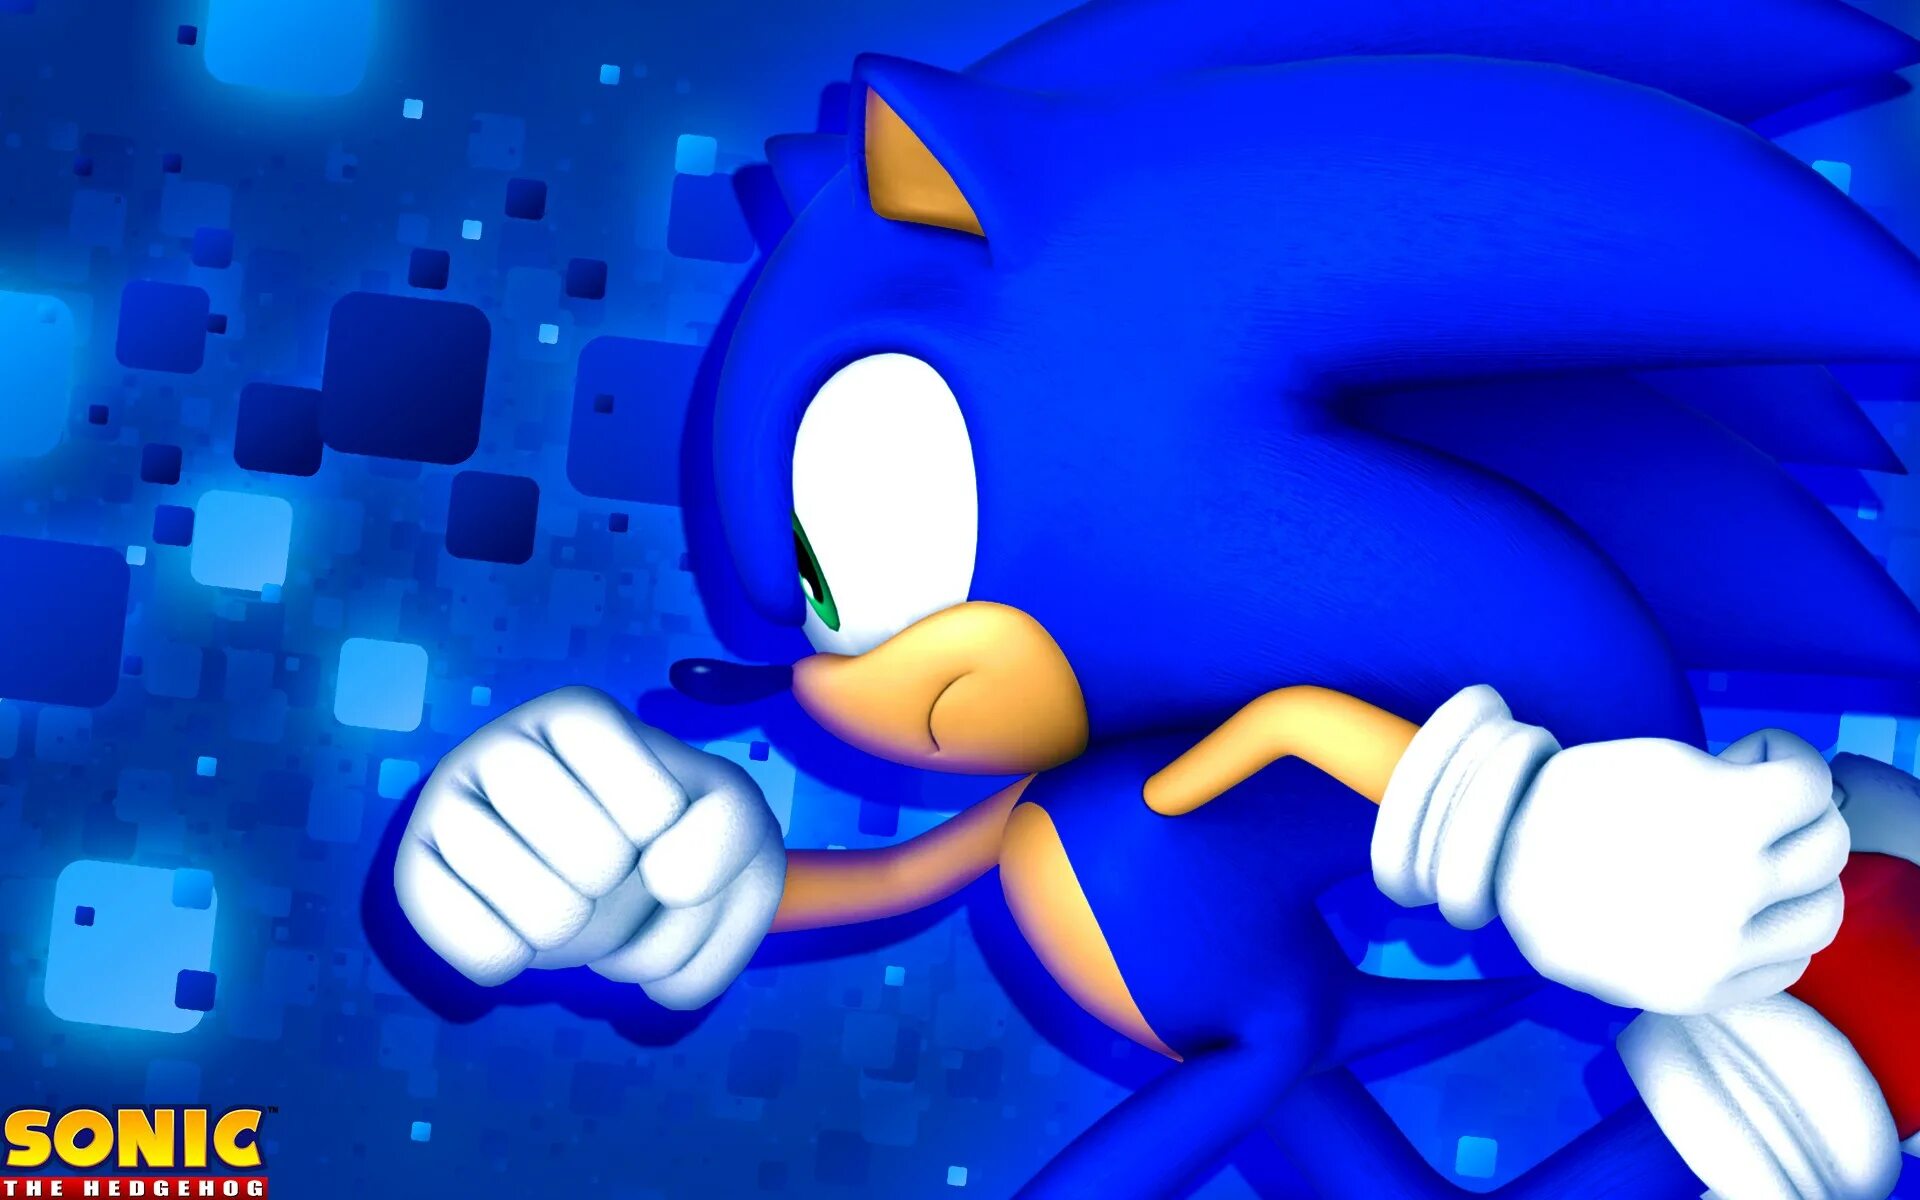 Ёж Соник. Sonic the Hedgehog (игра, 2006).